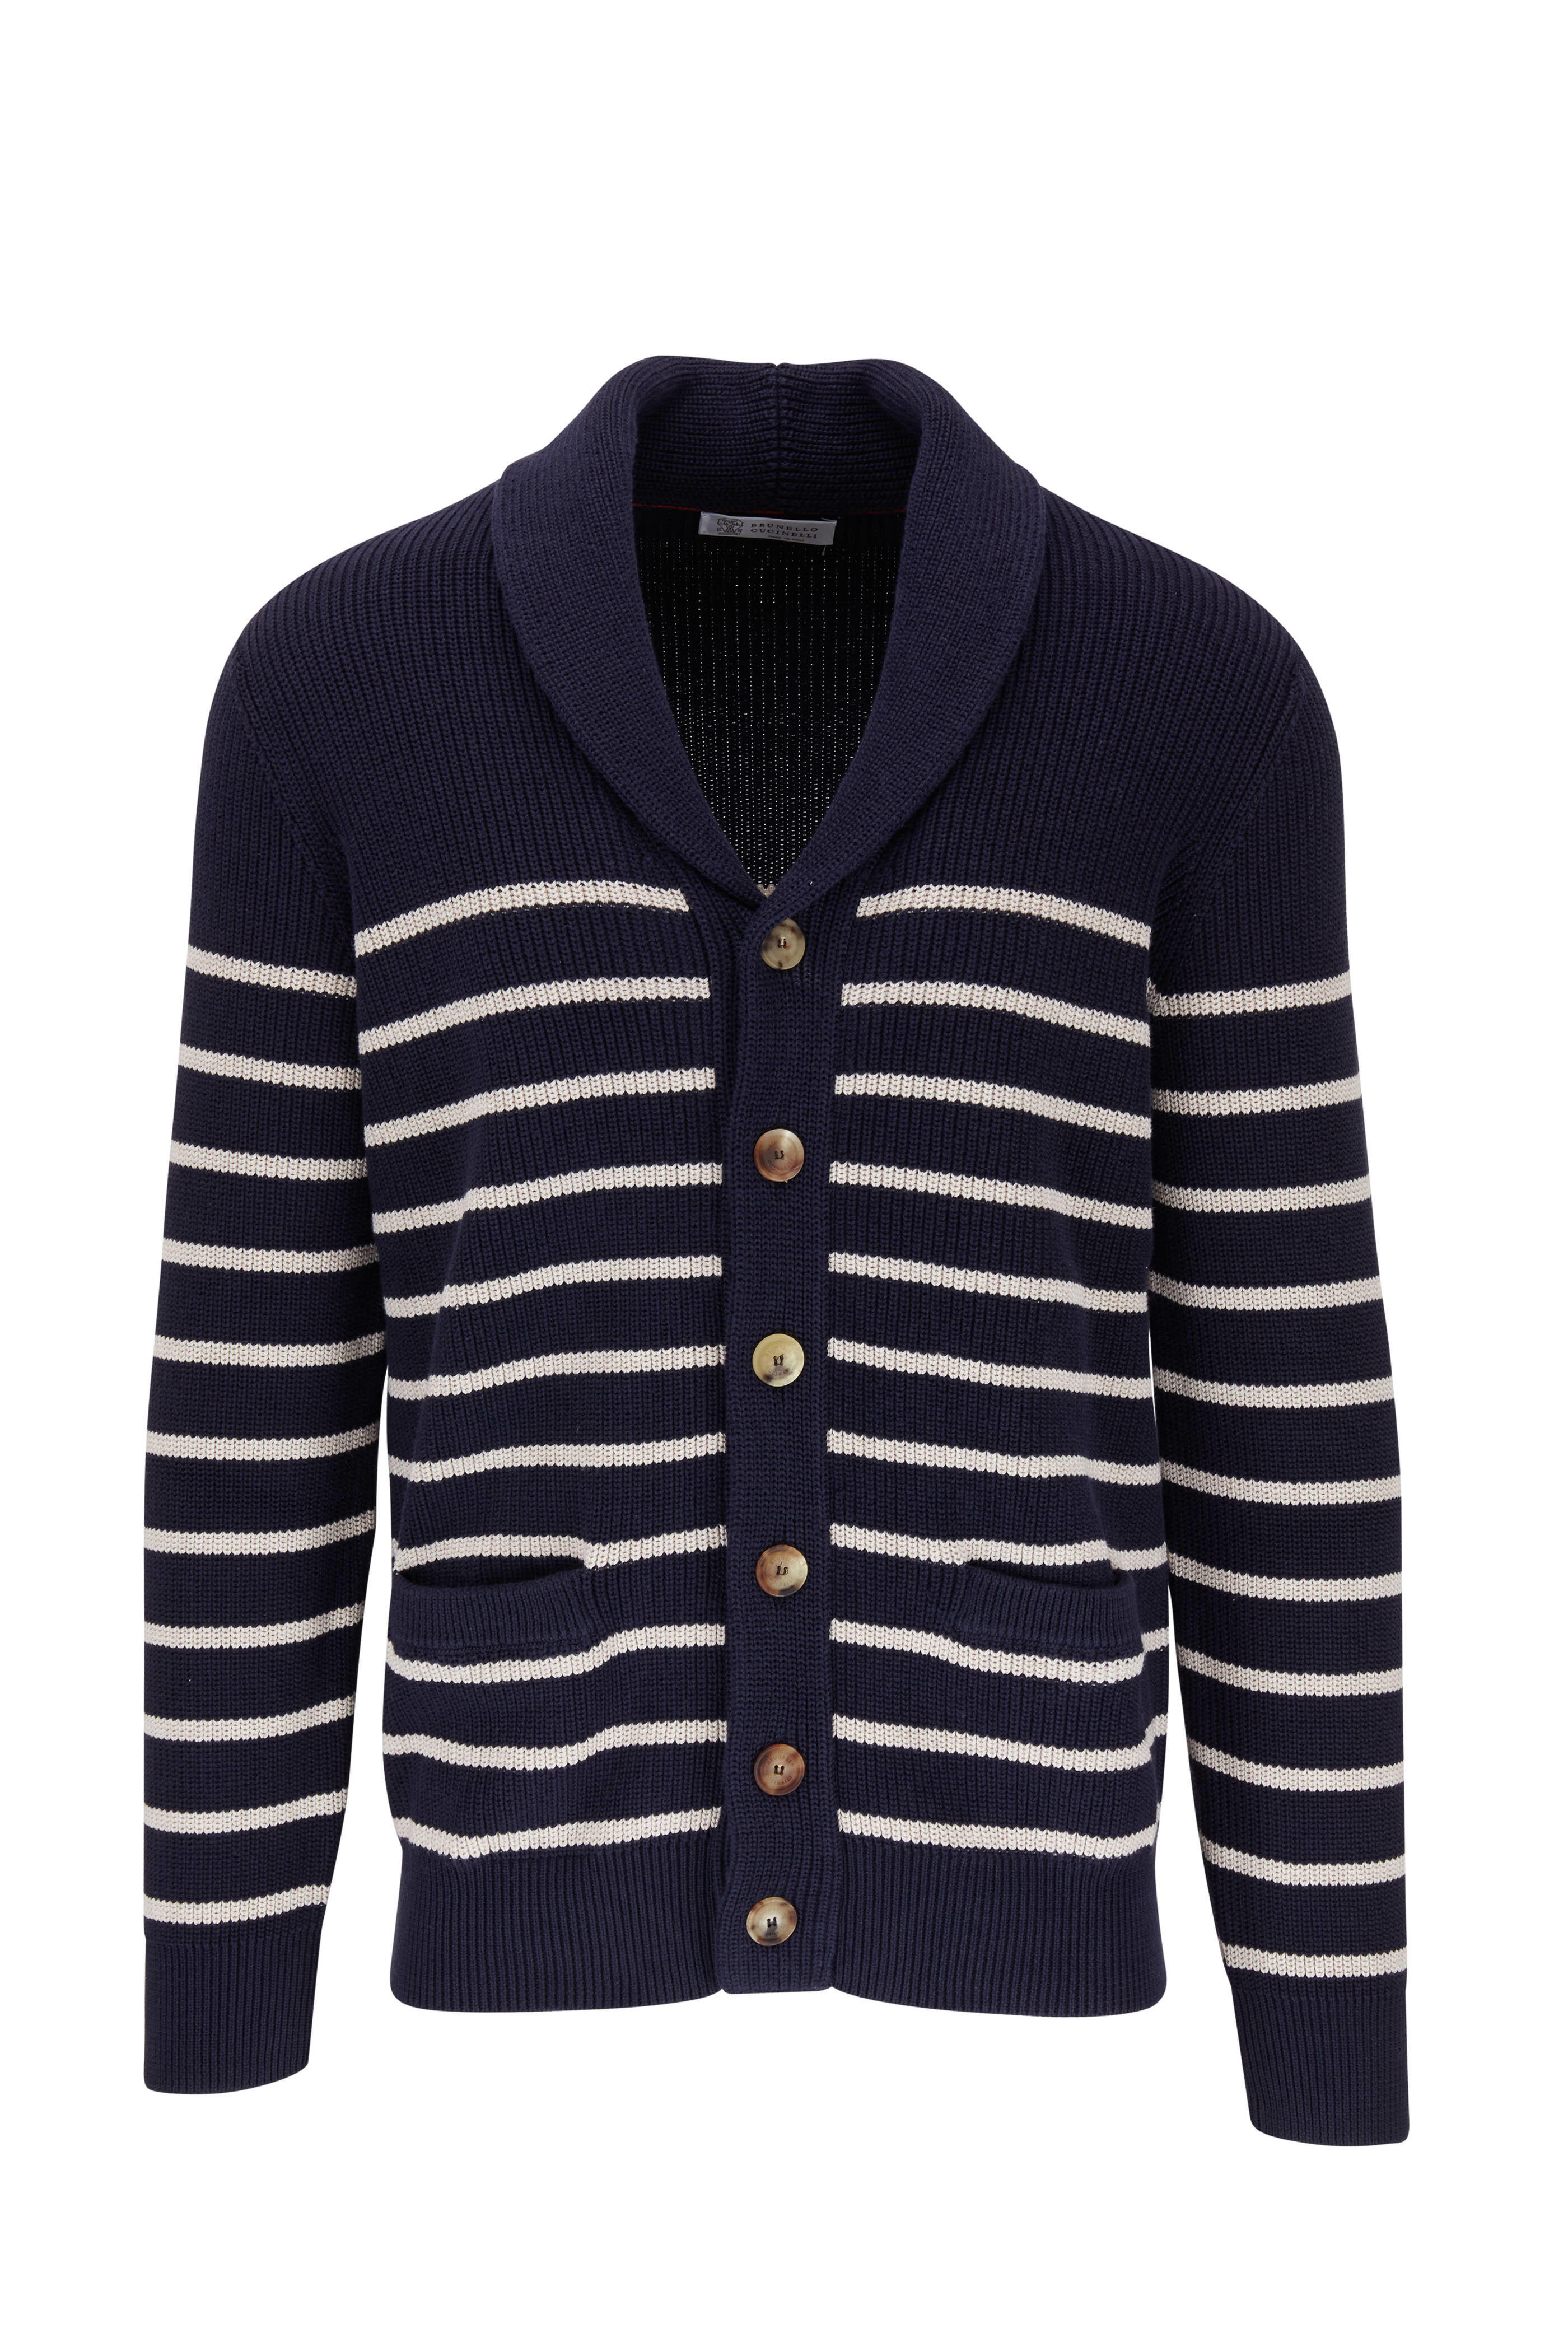 Brunello Cucinelli Shawl-Collar Ribbed Cotton Cardigan - Men - Navy Knitwear - XL